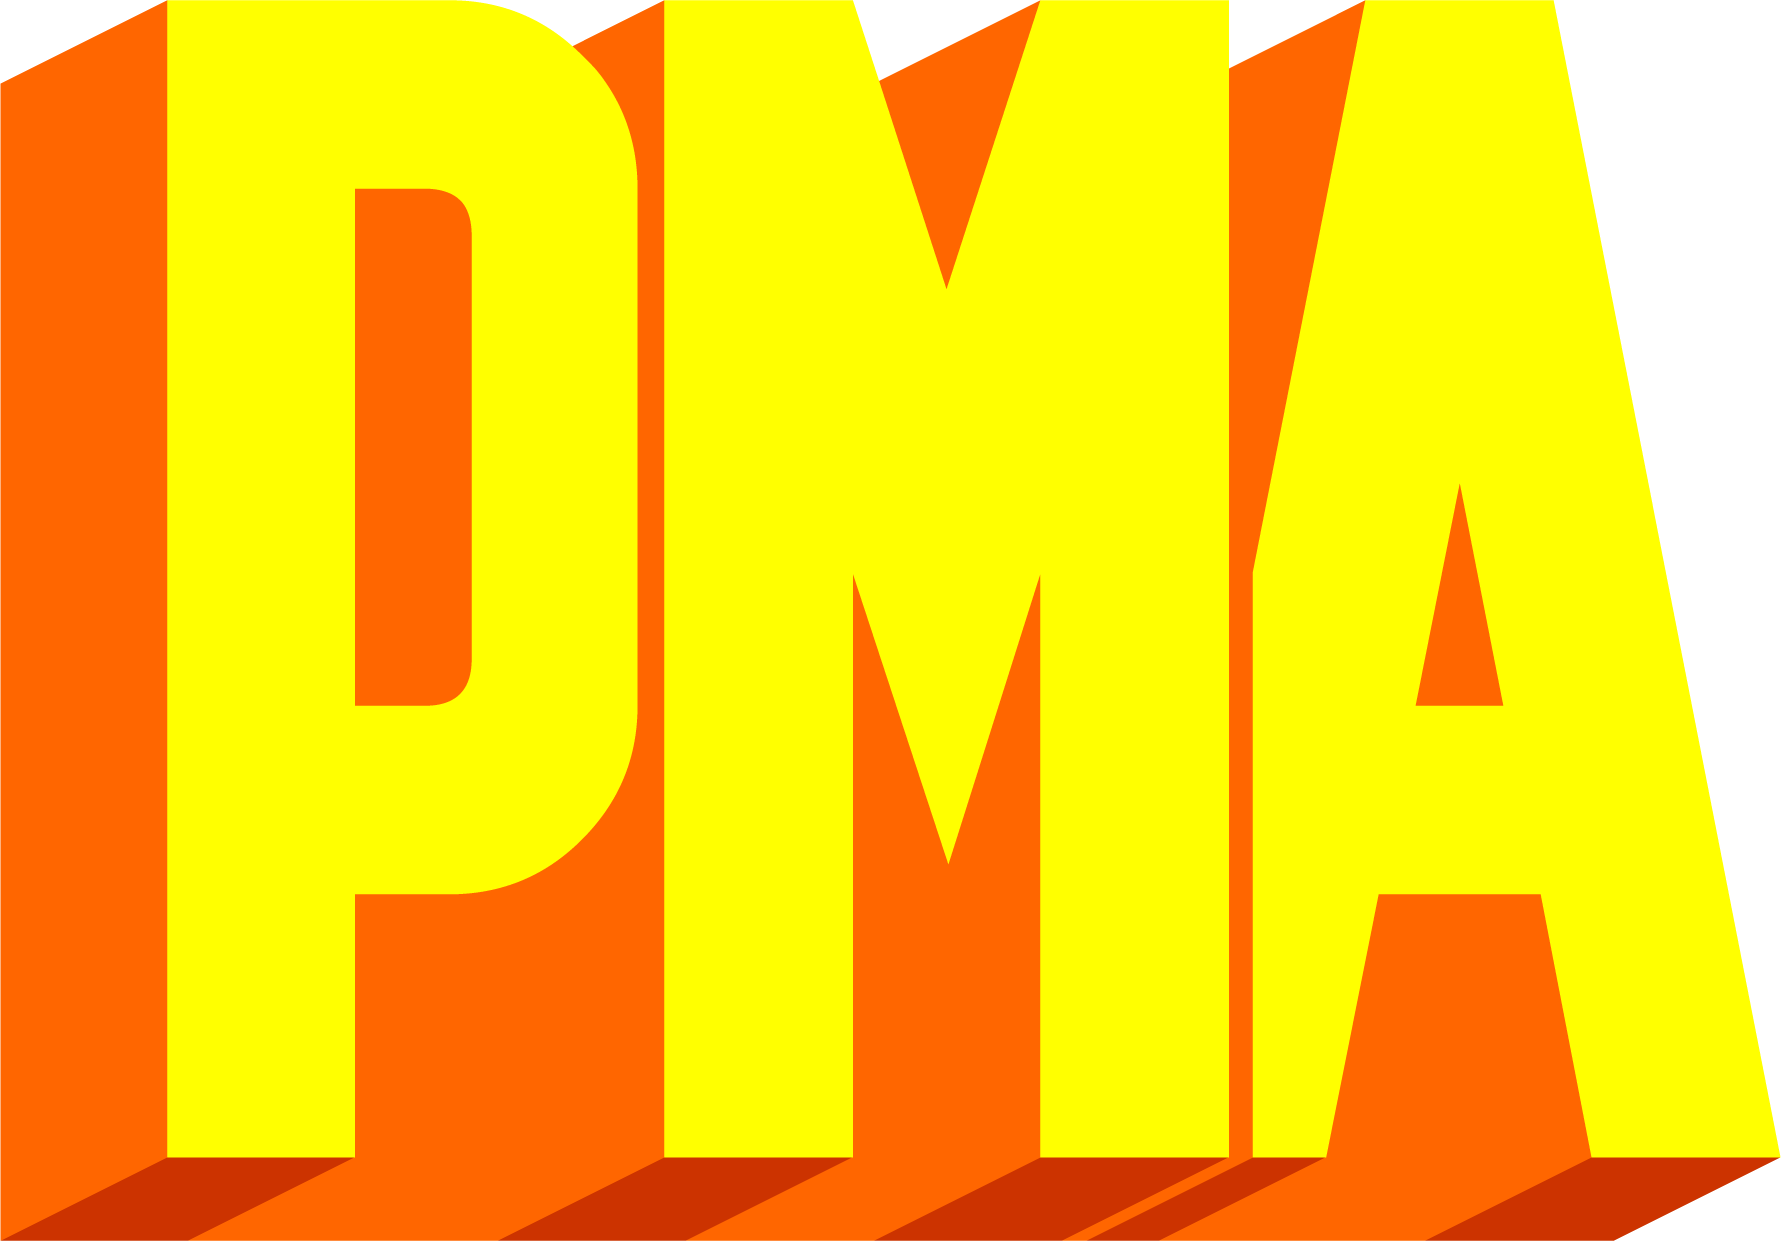 PMA Magazine